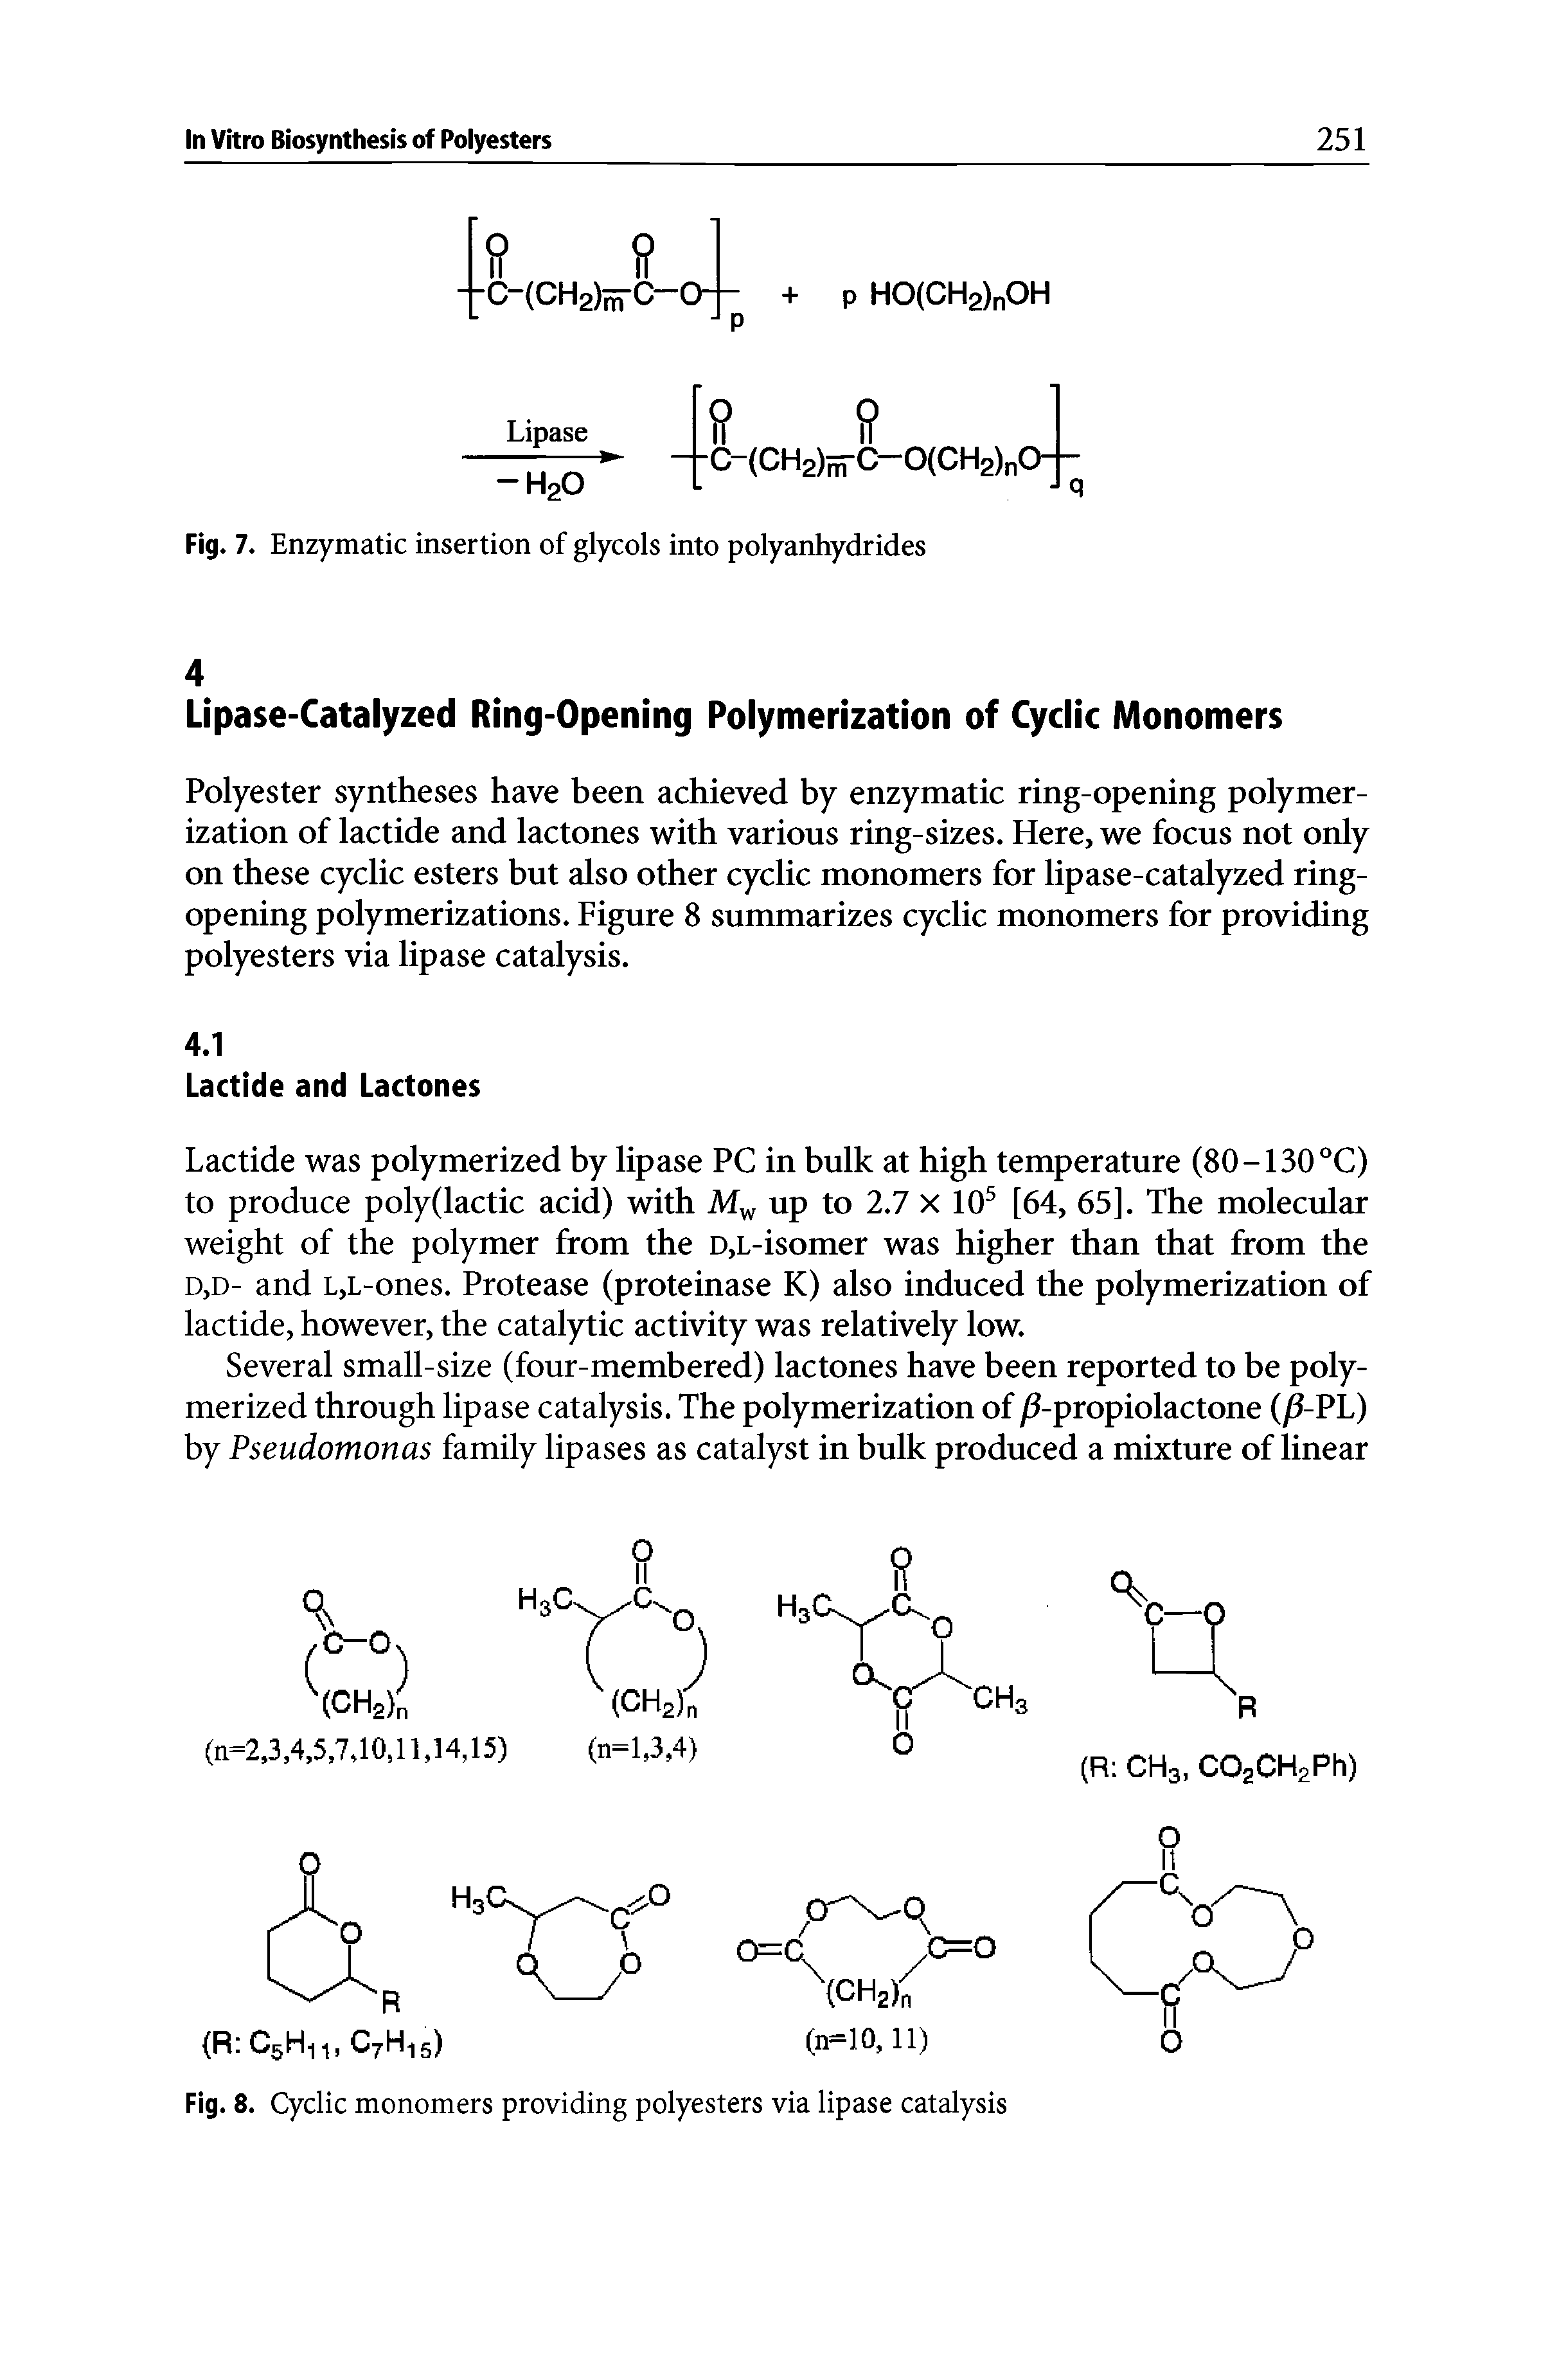 Fig. 8. Cyclic monomers providing polyesters via lipase catalysis...